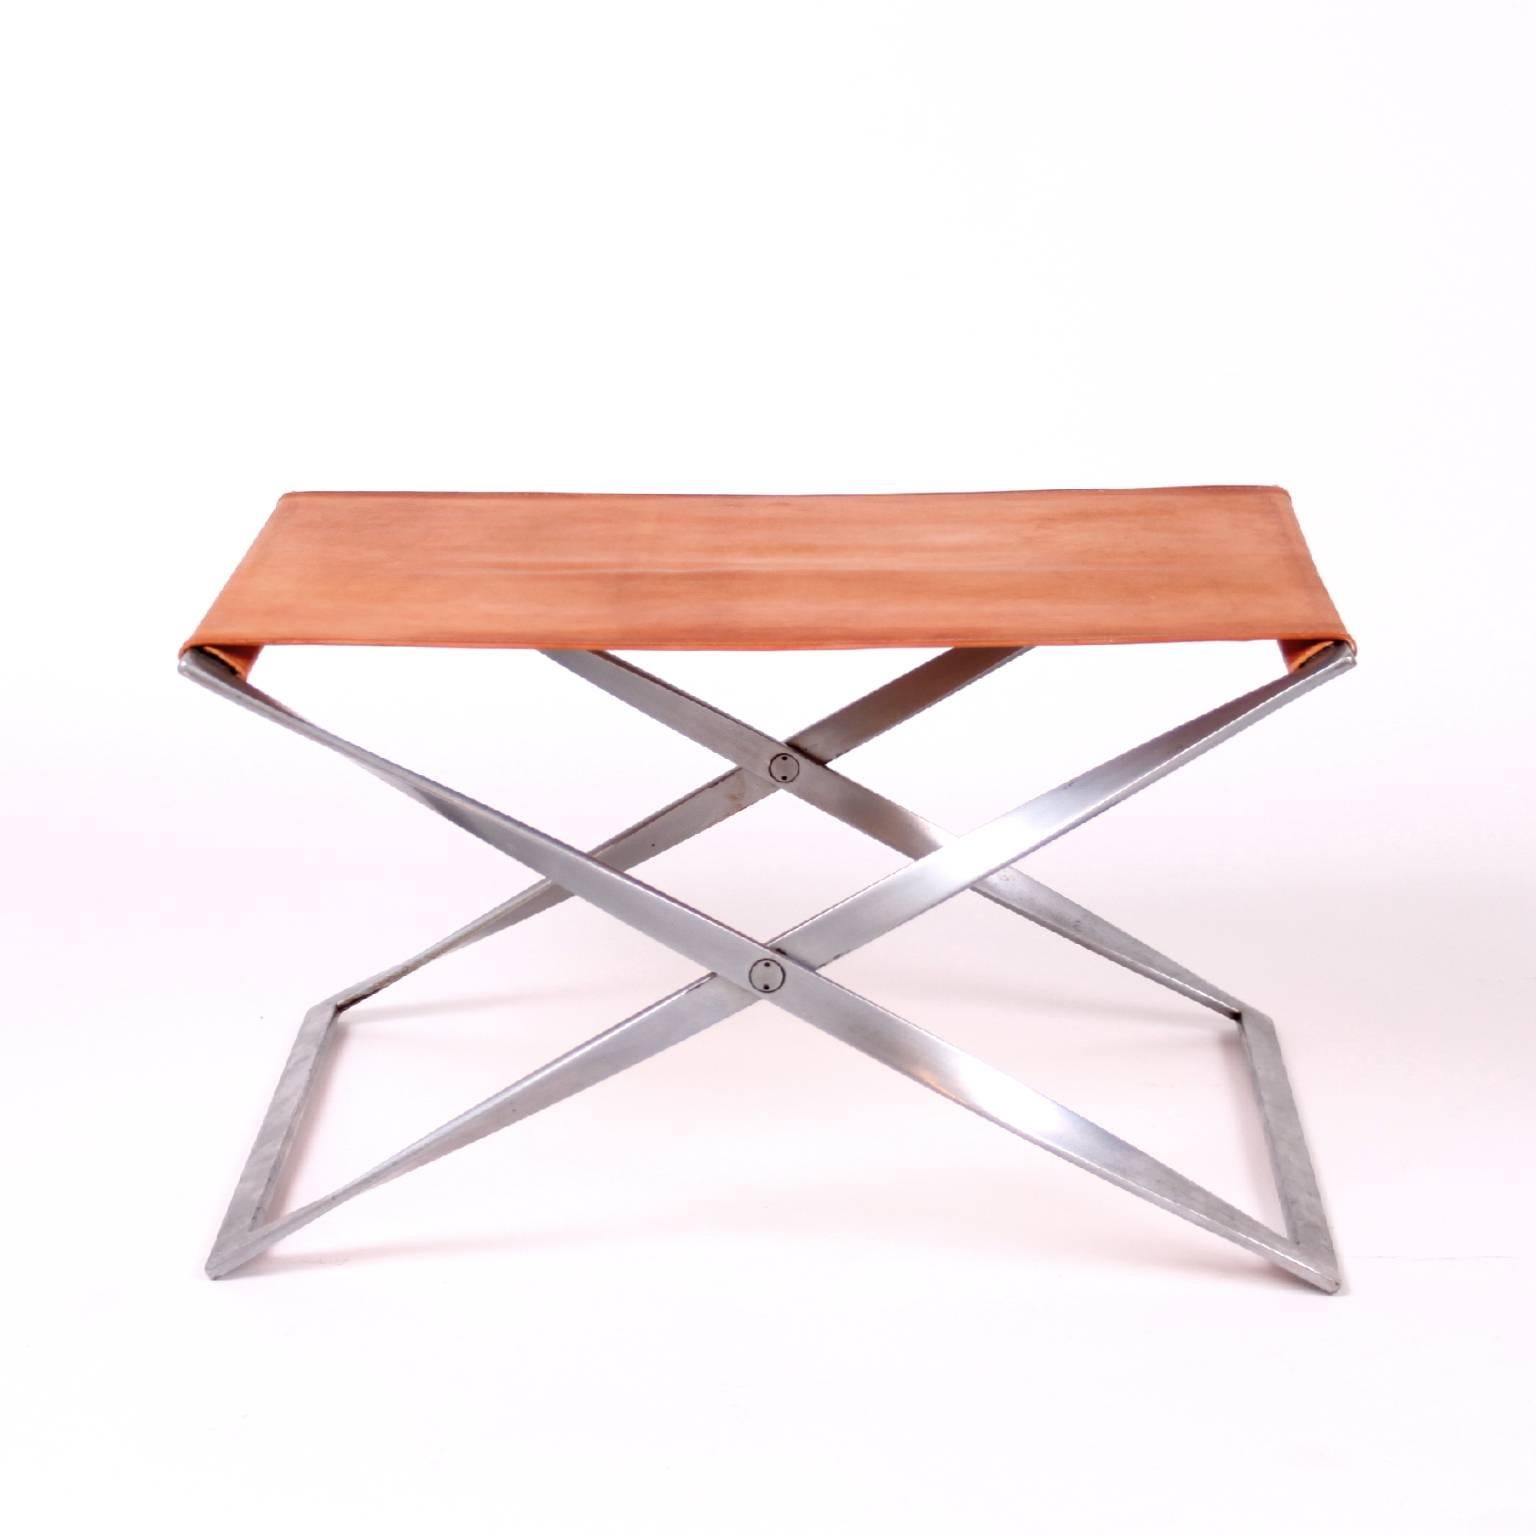 PK 91 folding stool by Poul Kjærholm.
Designed 1961.
Manufactured by E. Kold Christensen A/S, Copenhagen, Denmark.
Materials: Patinated natural leather, matte, chromed-plated steel frame.
Size: 37 x 60 x 45 cm.